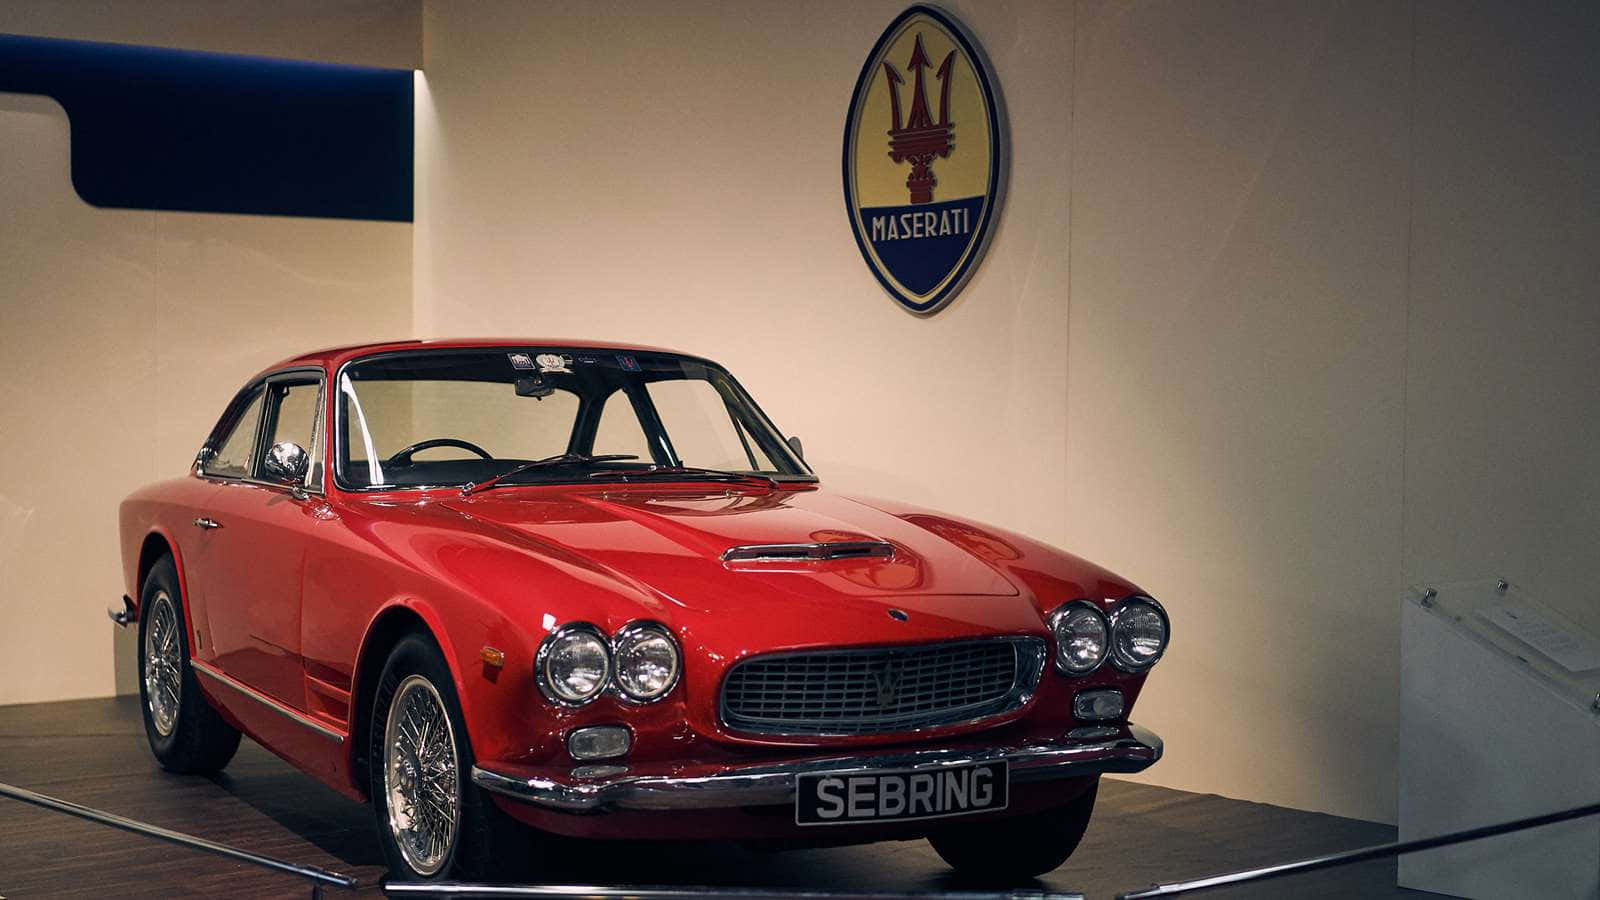 Classic Elegance - The Maserati Sebring Wallpaper